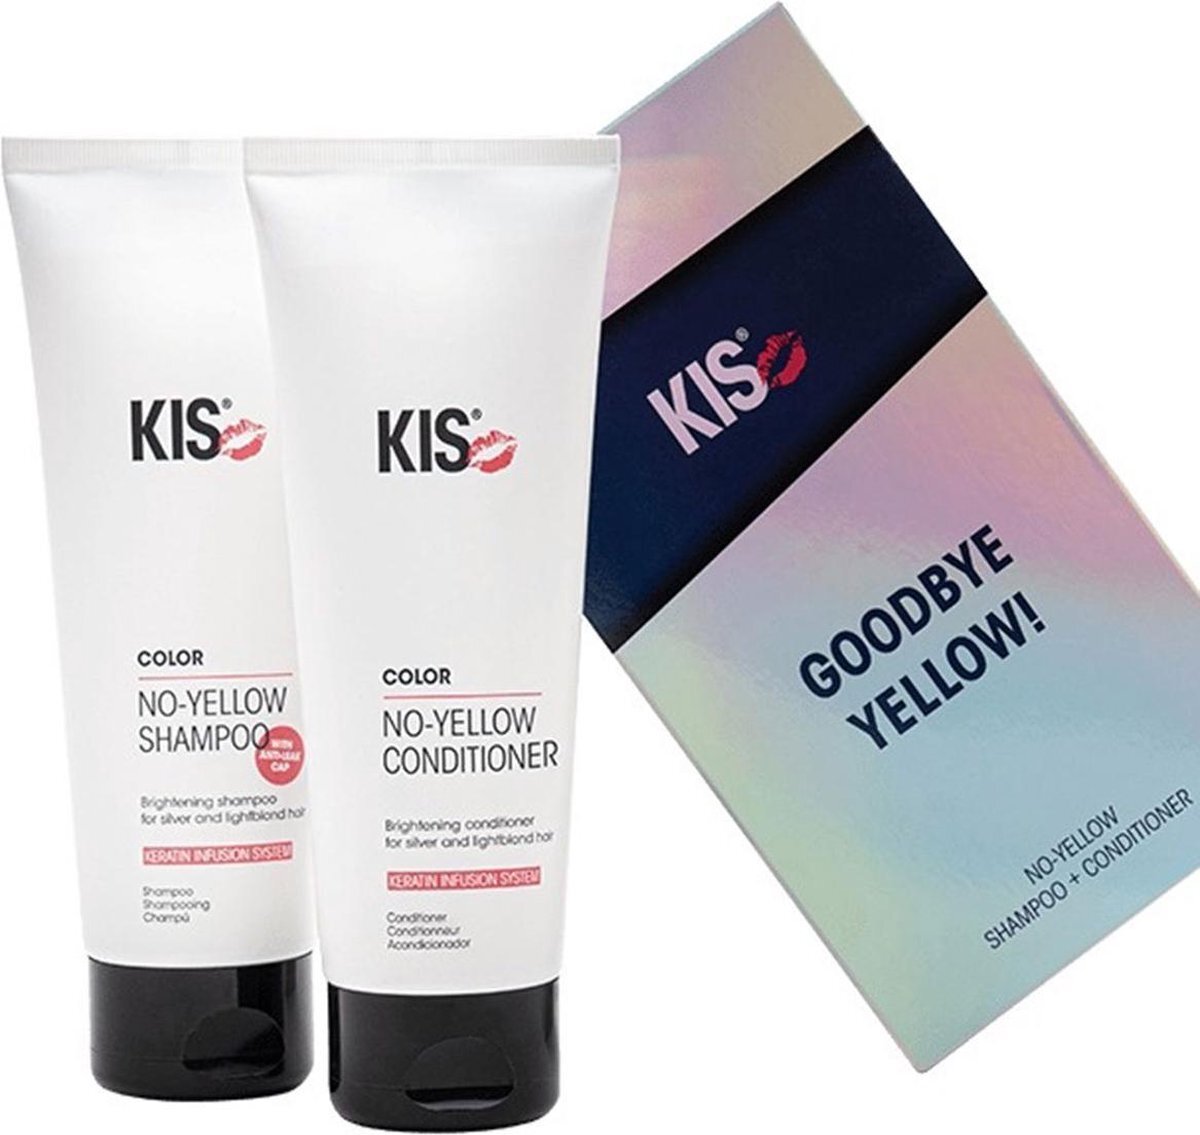 KiS-KiS KIS Duo Set No Yellow Shampoo & Conditioner